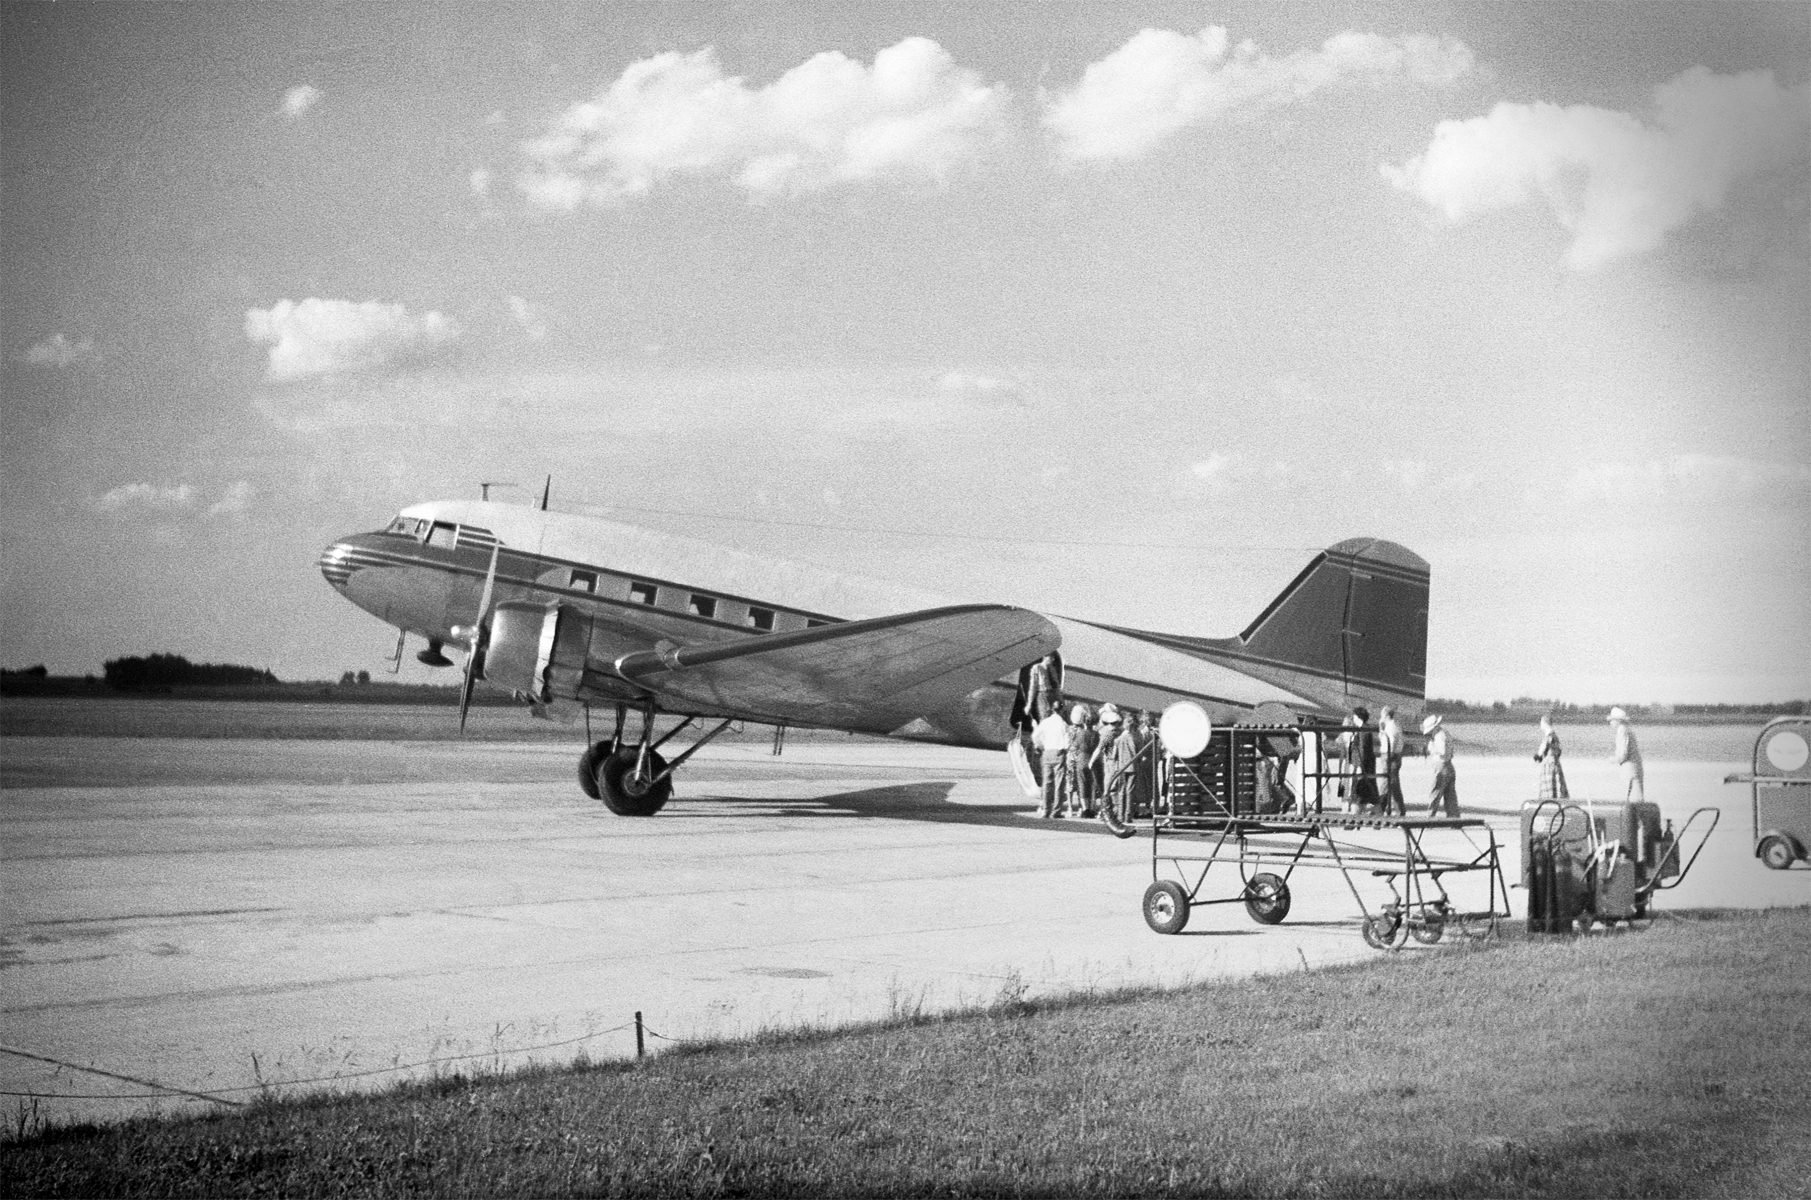 DC-3 airliner loading passengers 1951, retro